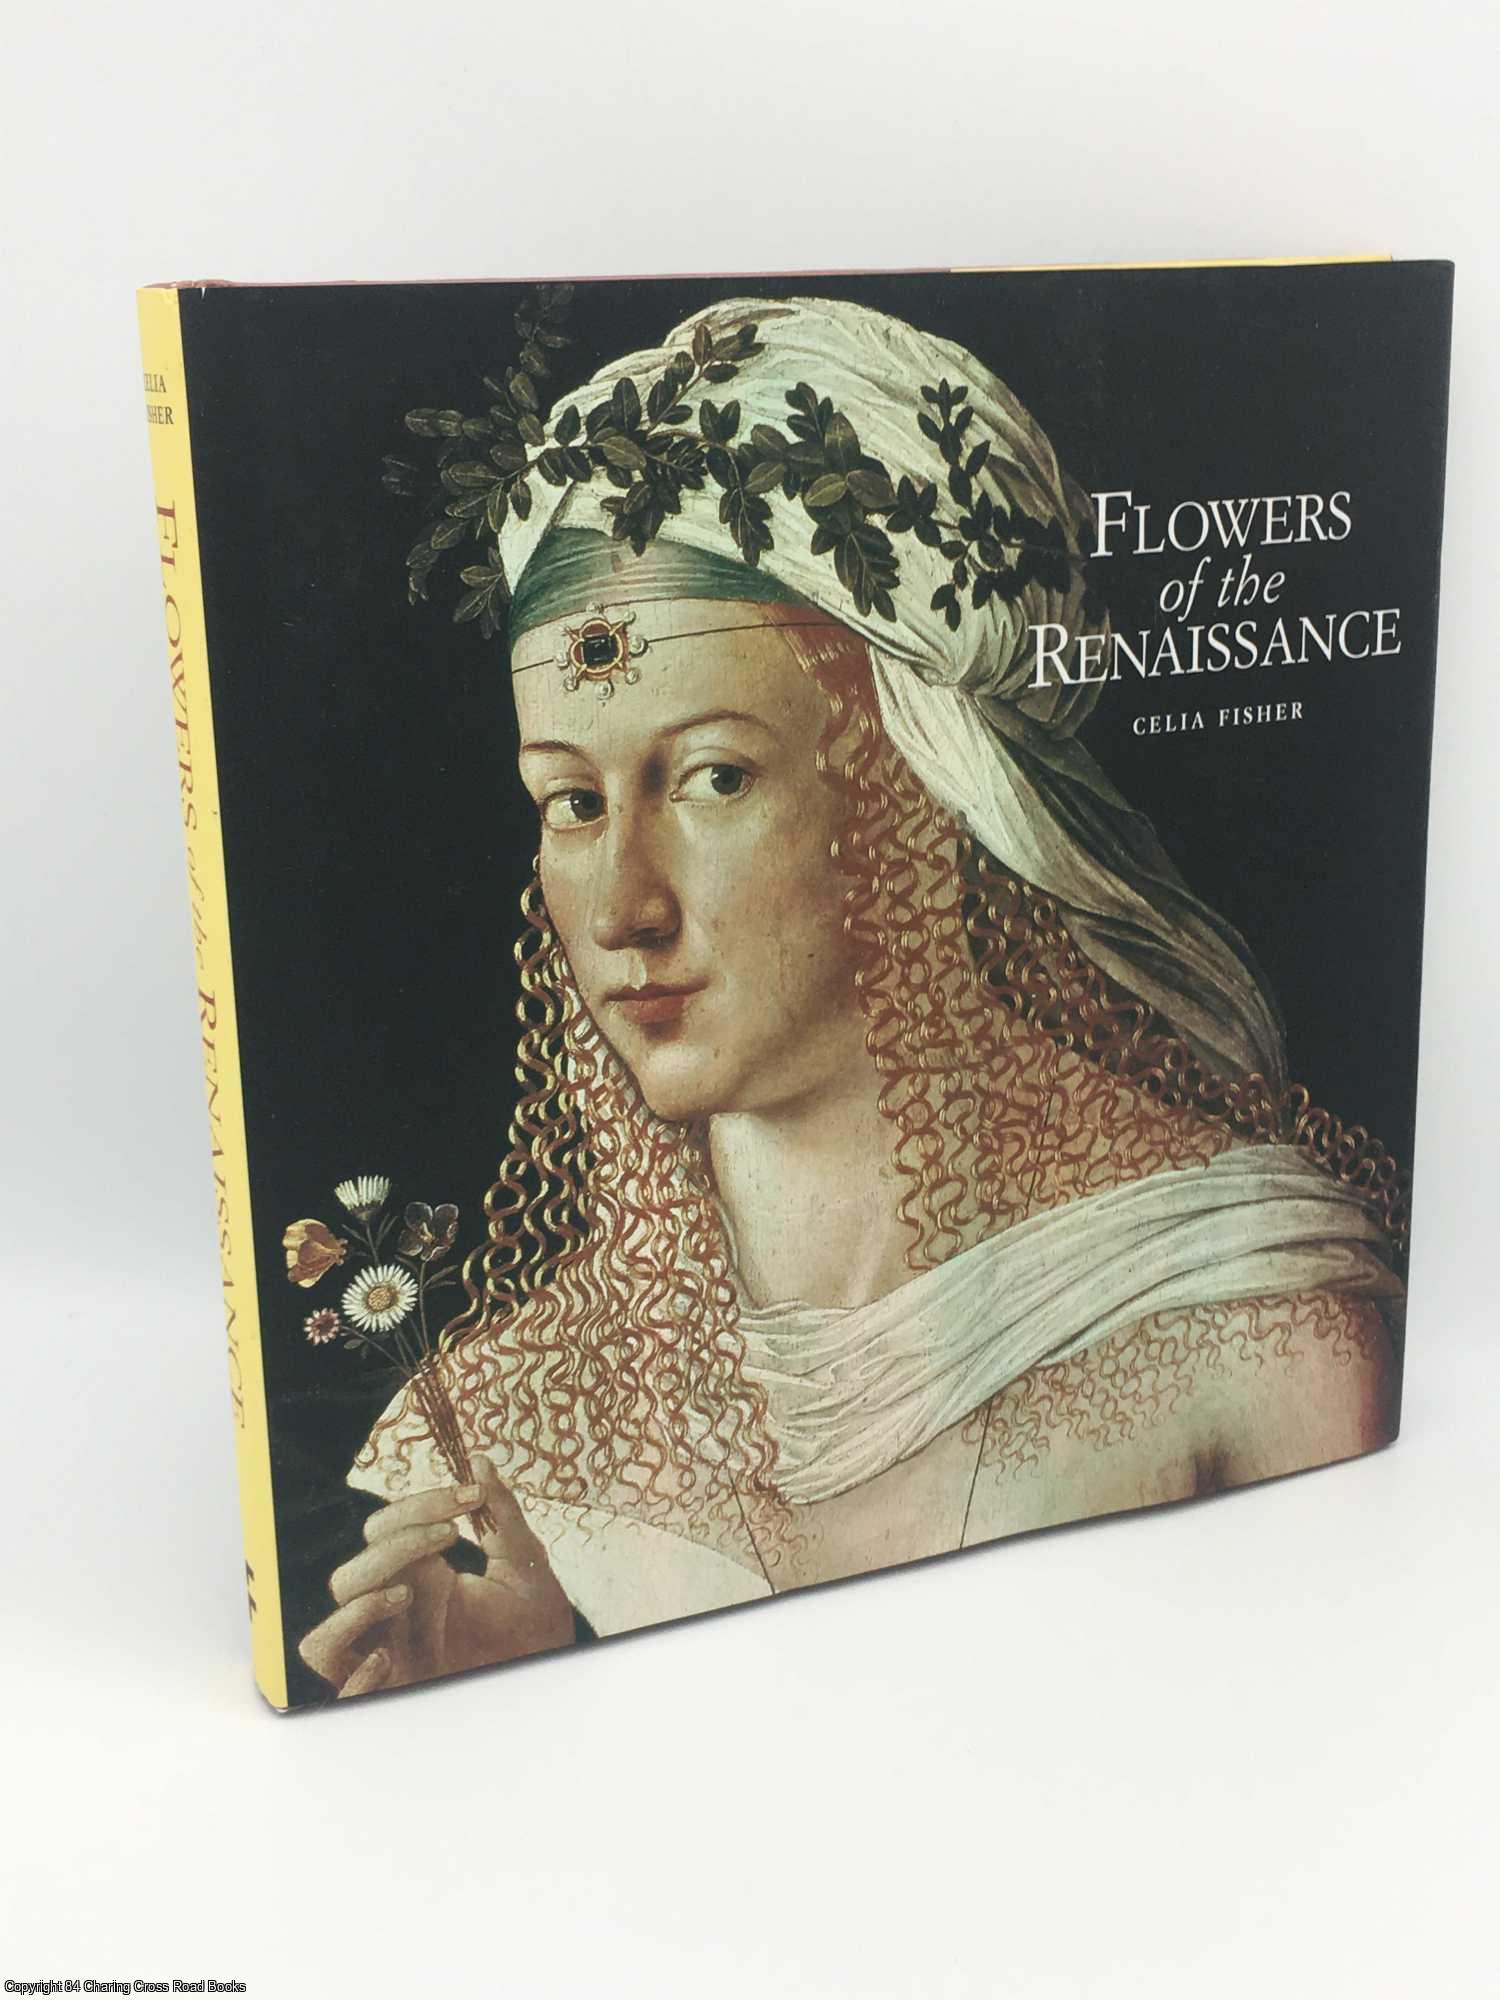 Fisher, Celia - Flowers of the Renaissance